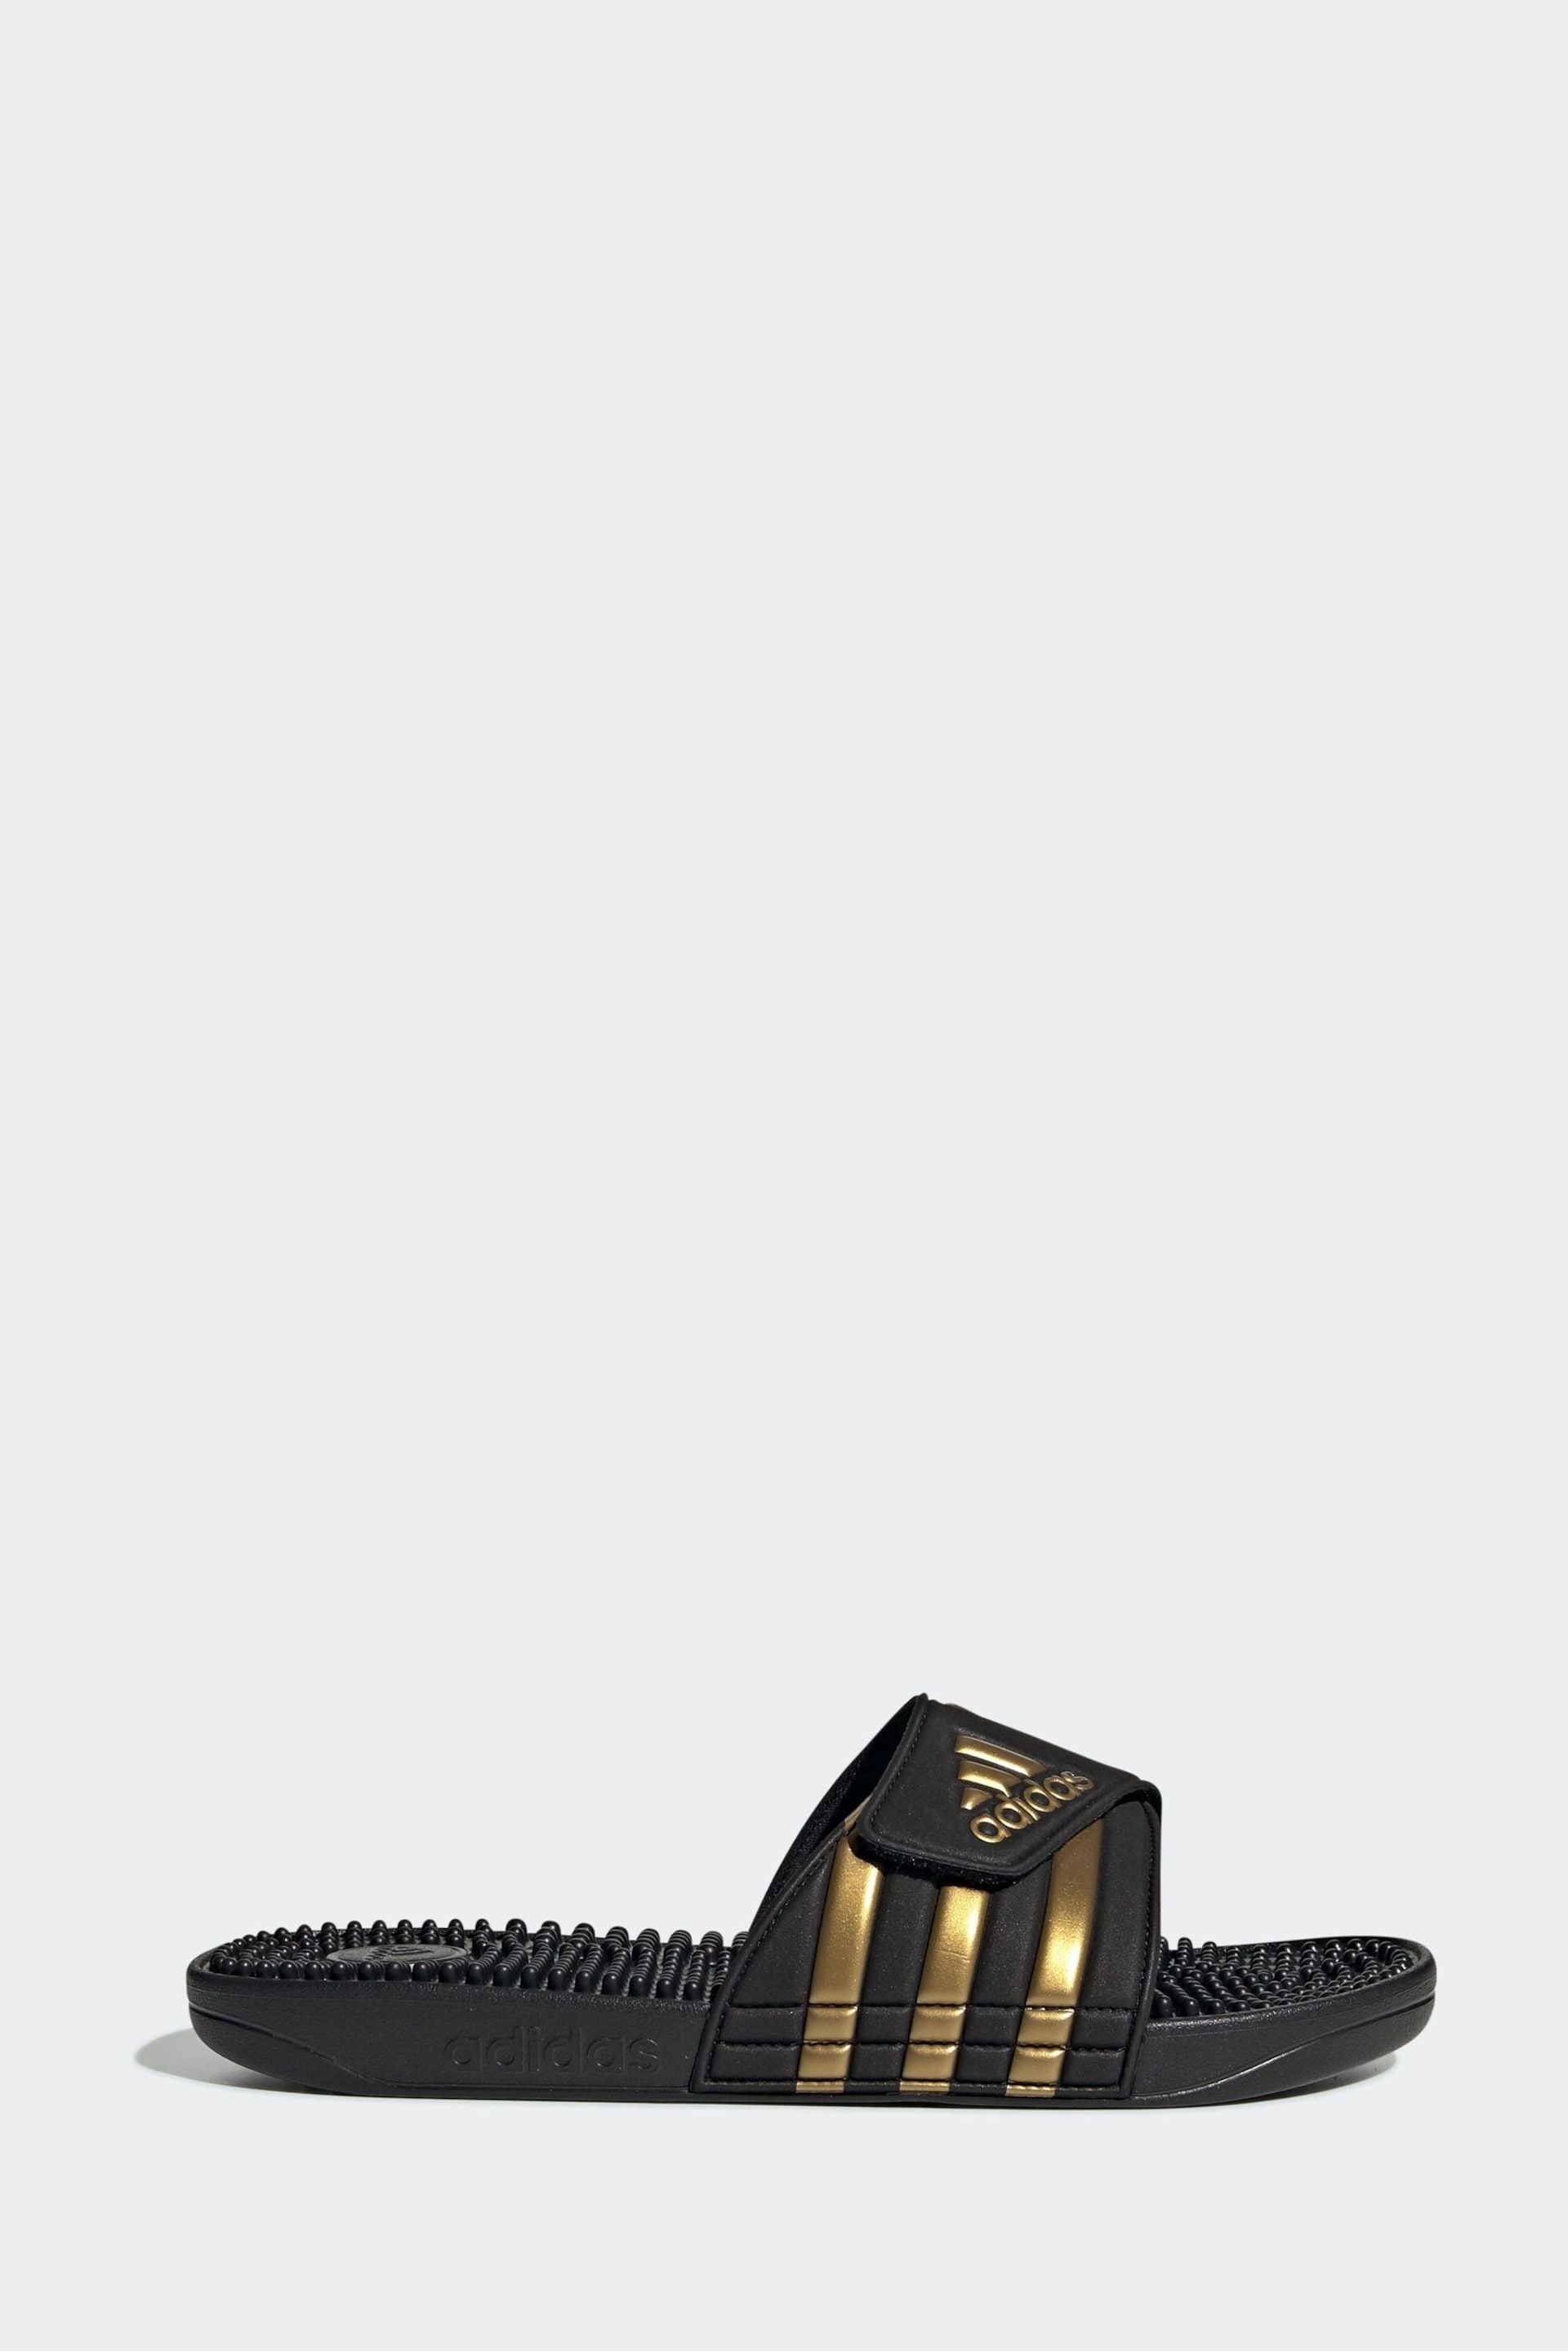 adidas Dark Black Sportswear Adissage Slides - Image 1 of 6